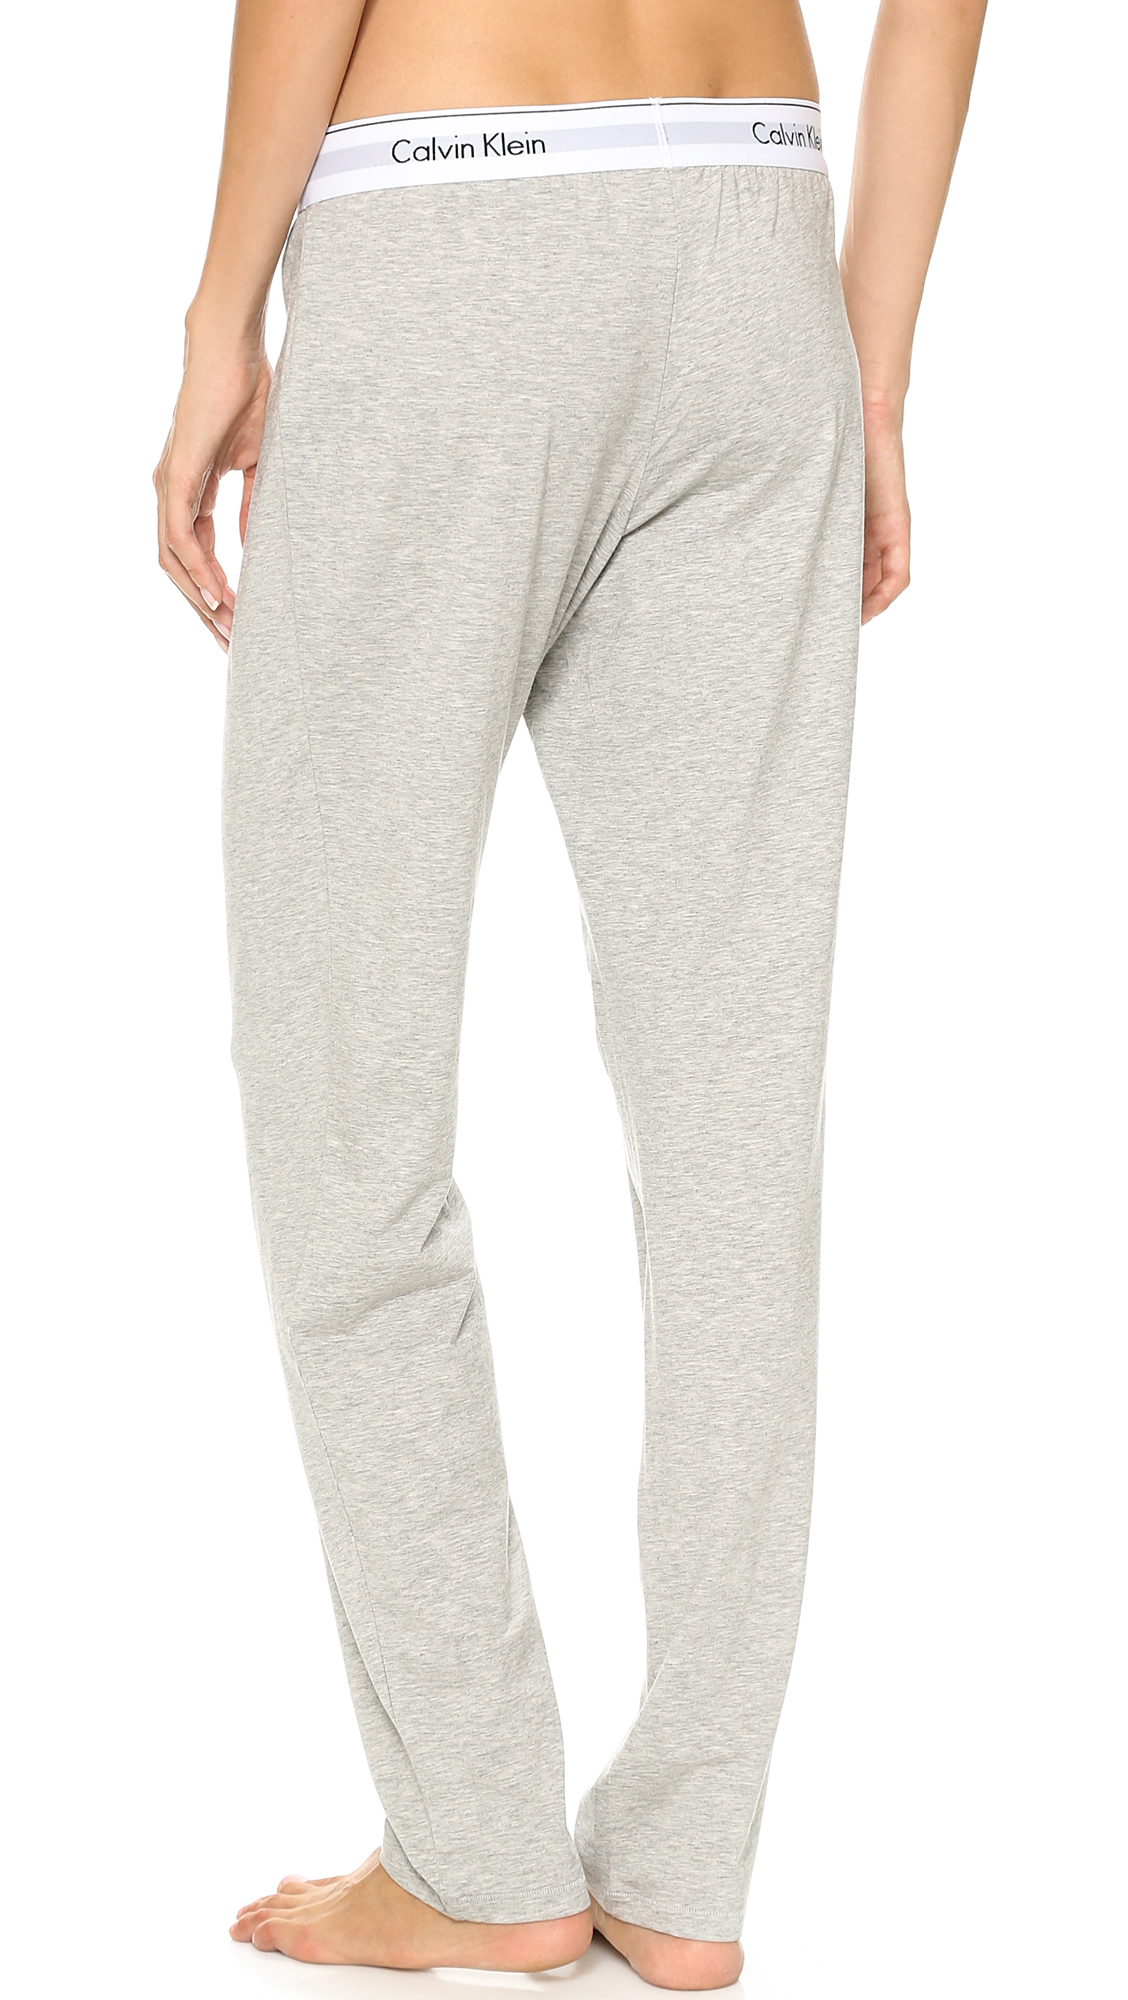 Lyst - Calvin Klein Modern Cotton Wide Pants - Grey Heather in Gray